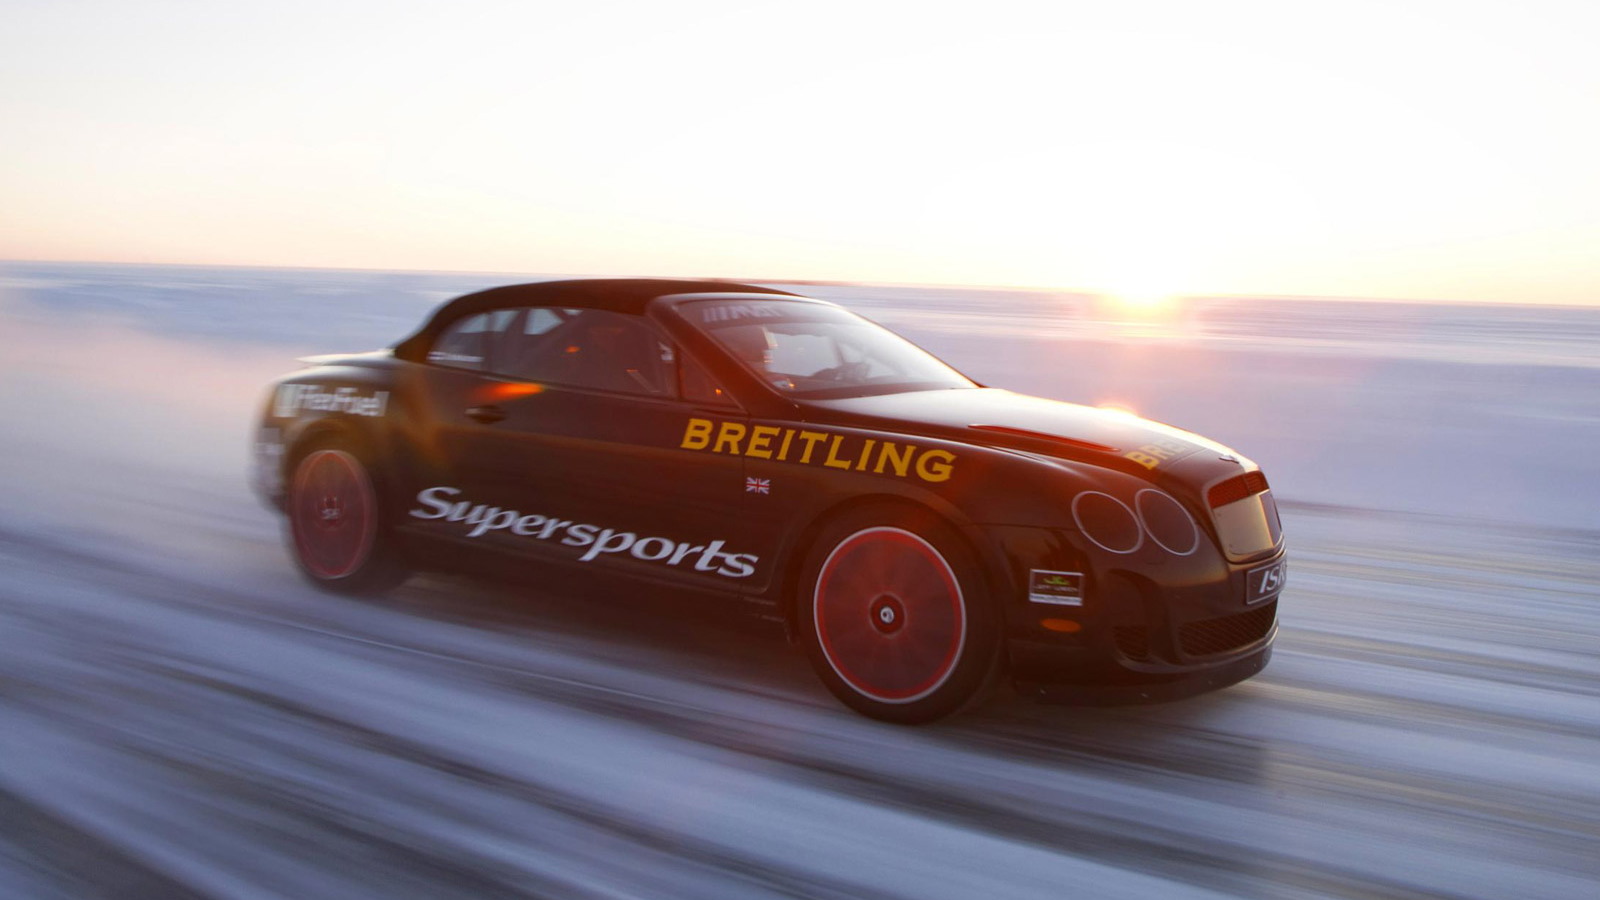 Bentley cold climate accessories range